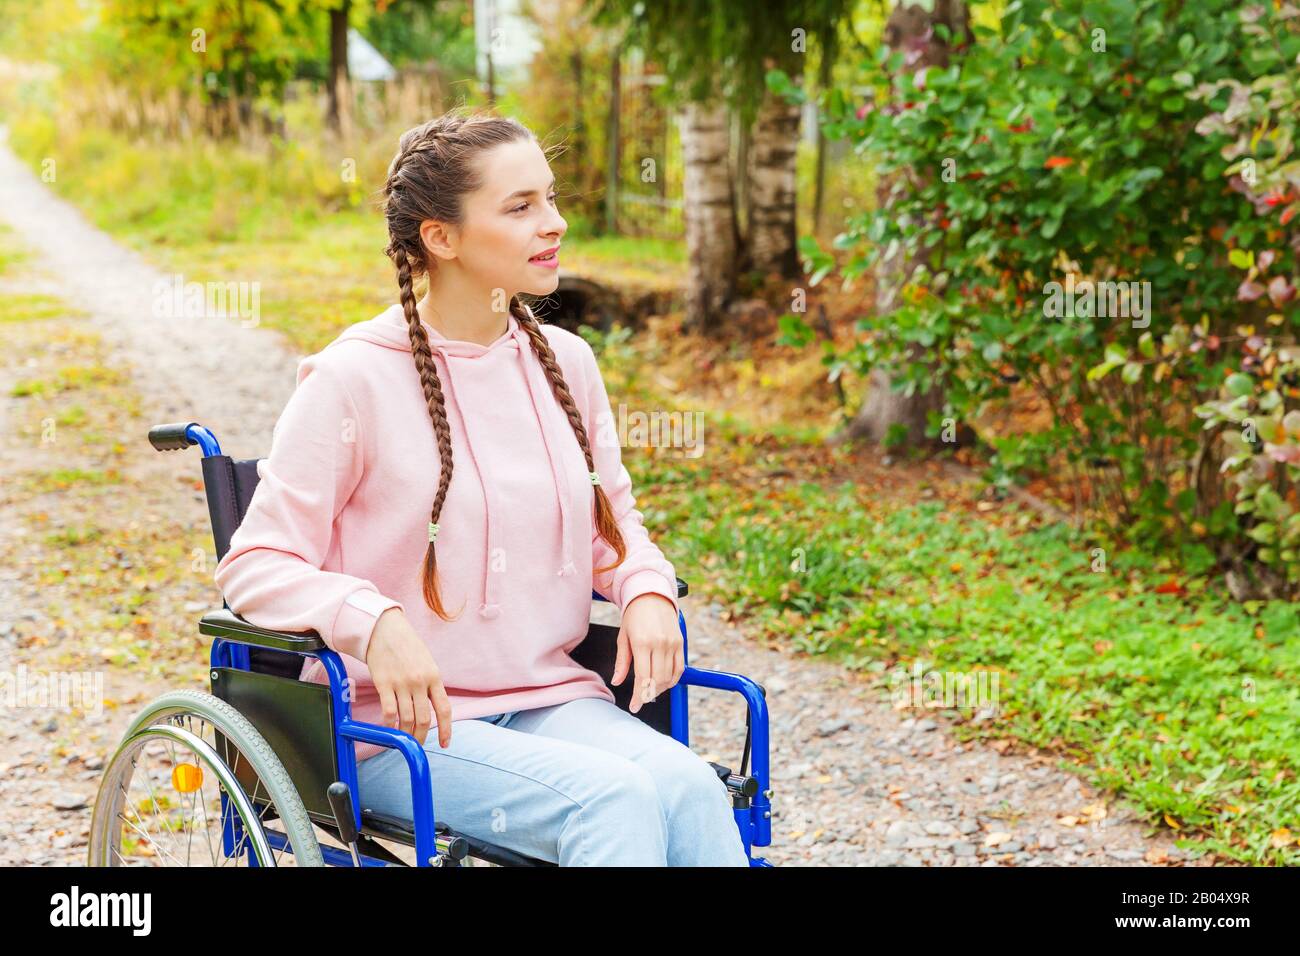 Invalid page. Инвалид. Девушка в инвалидной коляске. Девушка инвалид на коляске. Коляска для инвалидов.